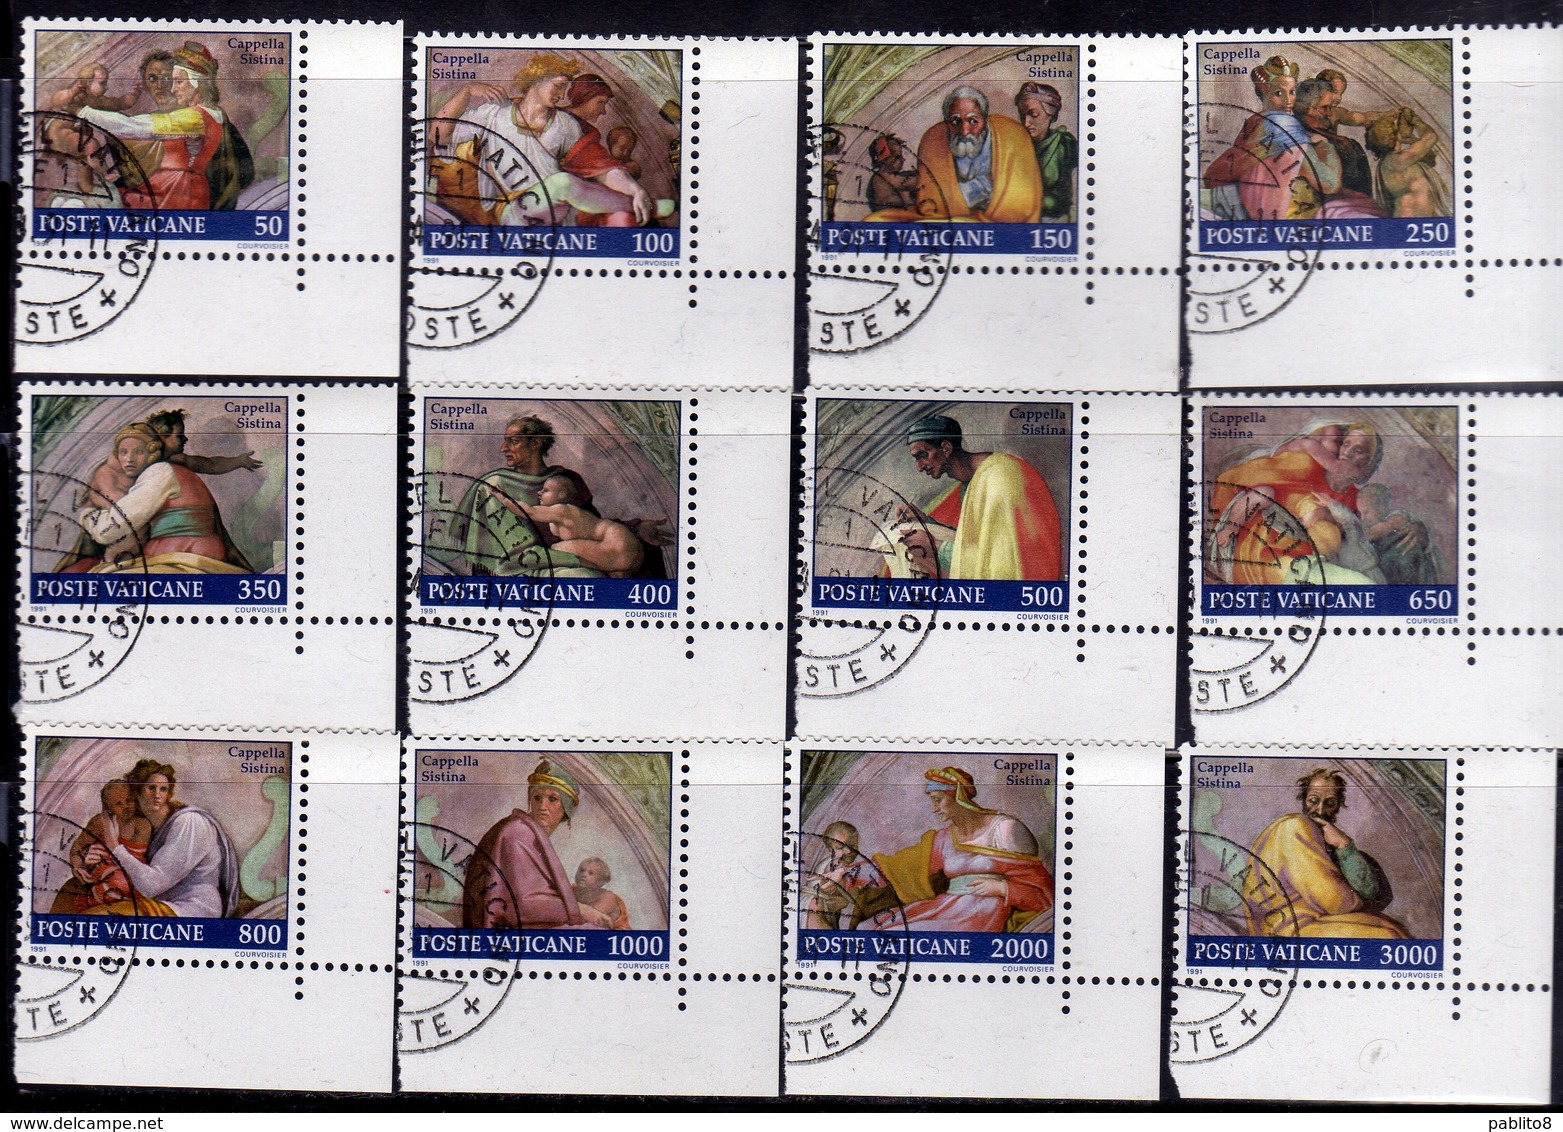 CITTÀ DEL VATICANO VATICAN VATIKAN 1991 CAPPELLA SISTINA SISTINE CHAPEL SERIE COMPLETA COMPLETE SET USATA USED OBLITERE' - Used Stamps